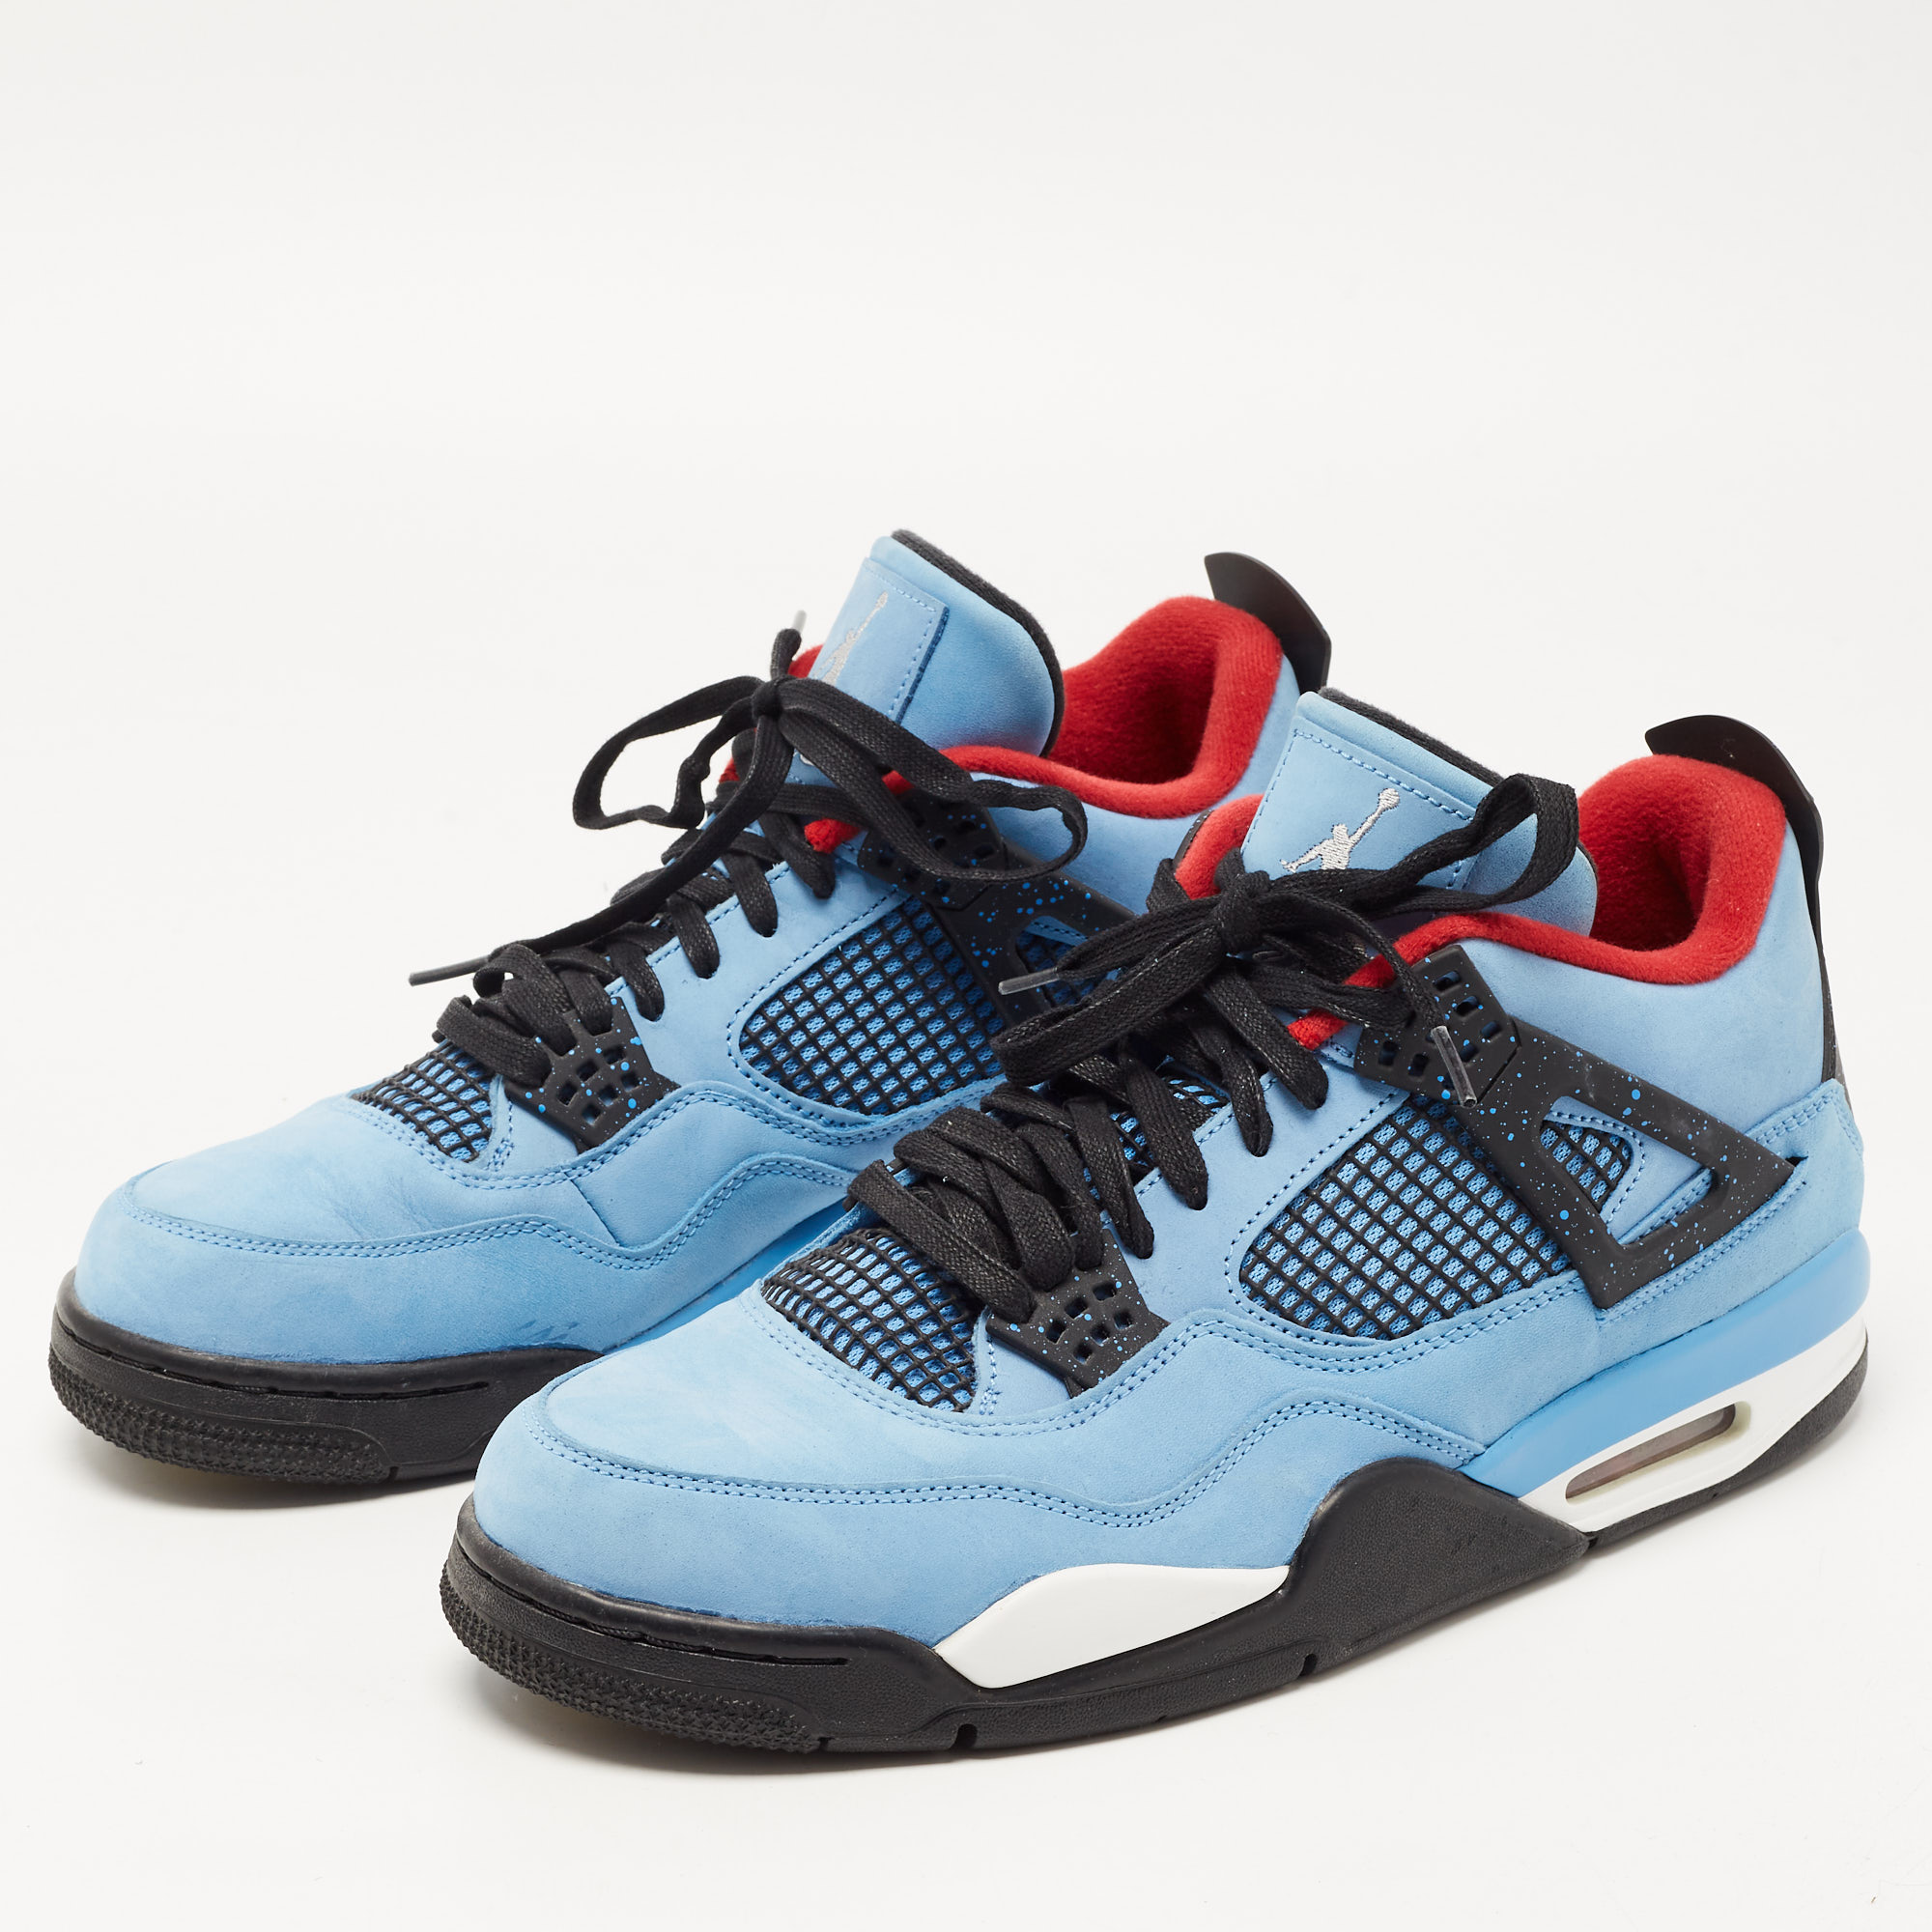 

Air Jordan x Travis Scott Blue Nubuck Leather Jordan 4 Retro Cactus Jack Sneakers Size